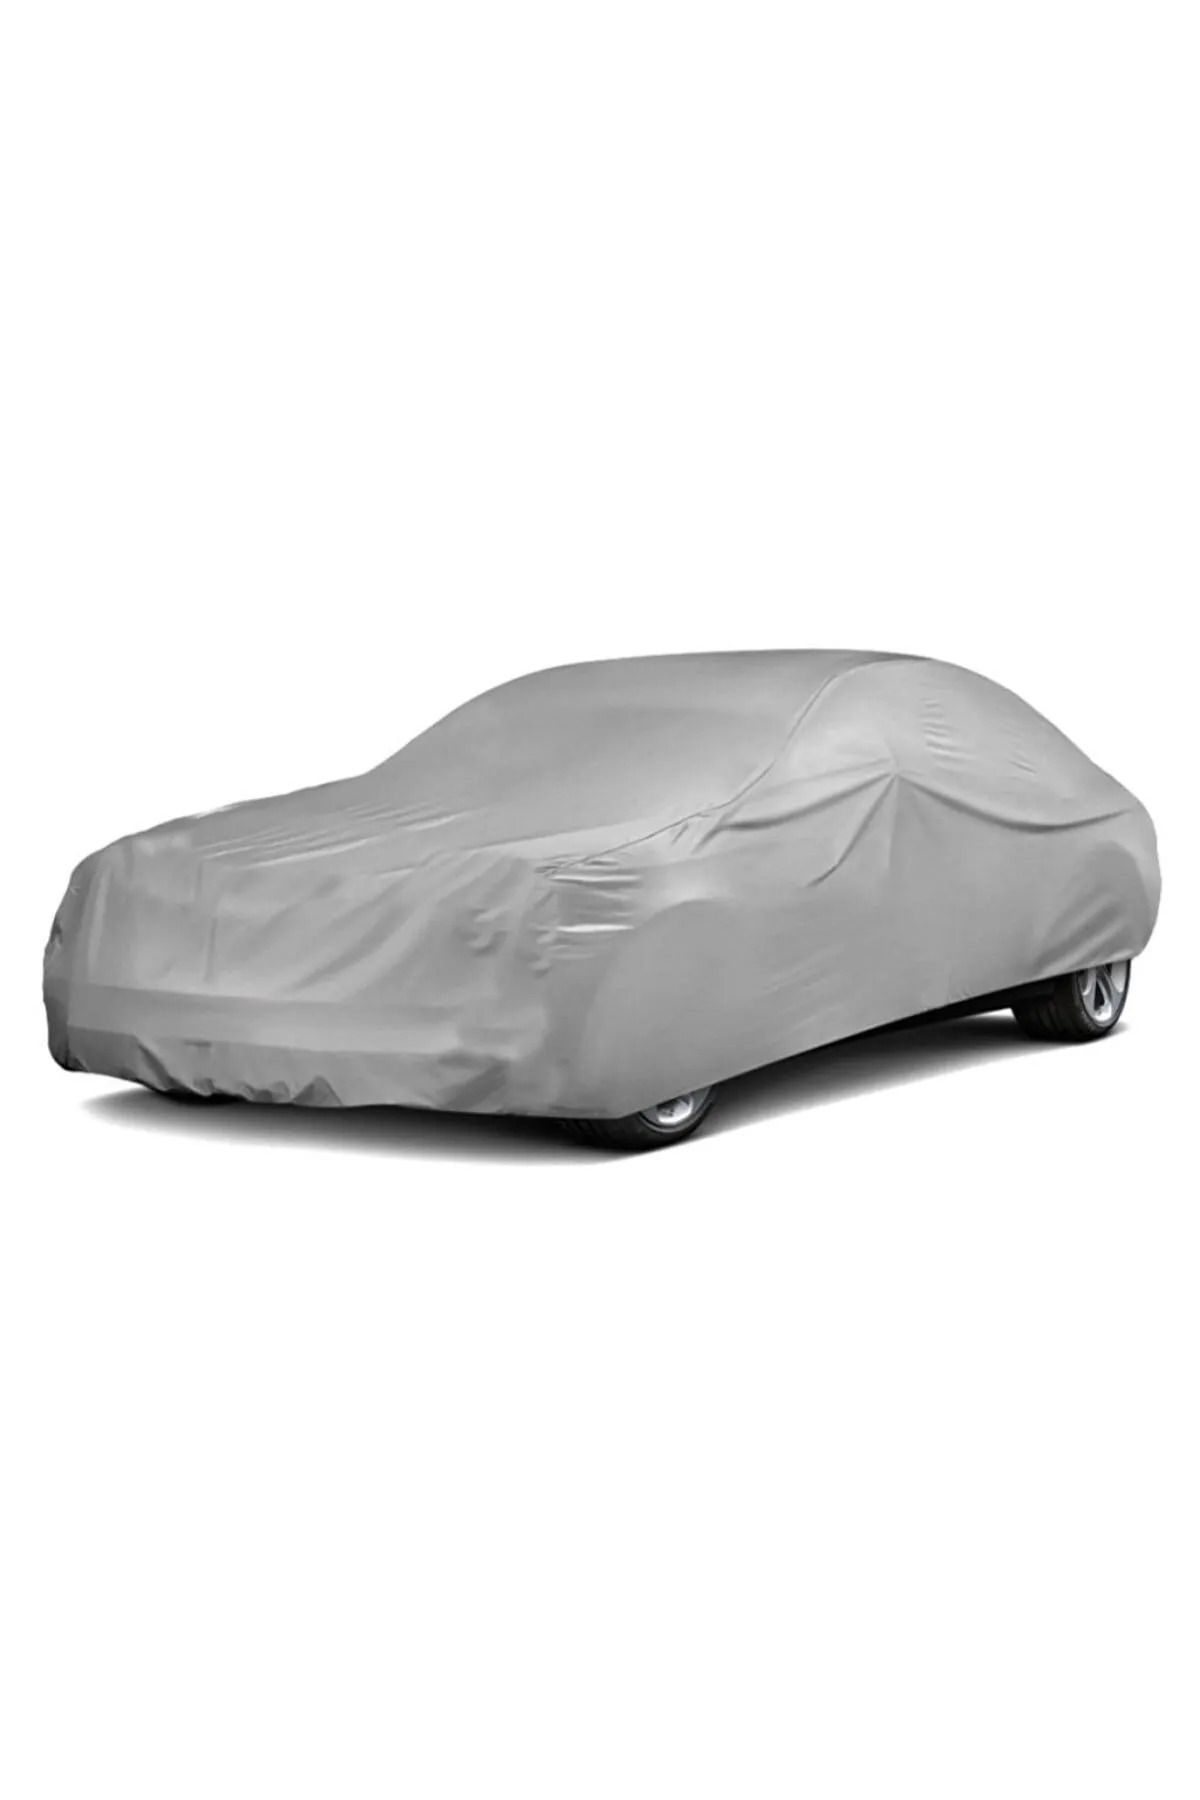 PlusOto Audi Rs3 Compatible Car Tarpaulin, Vehicle Cover, Tent